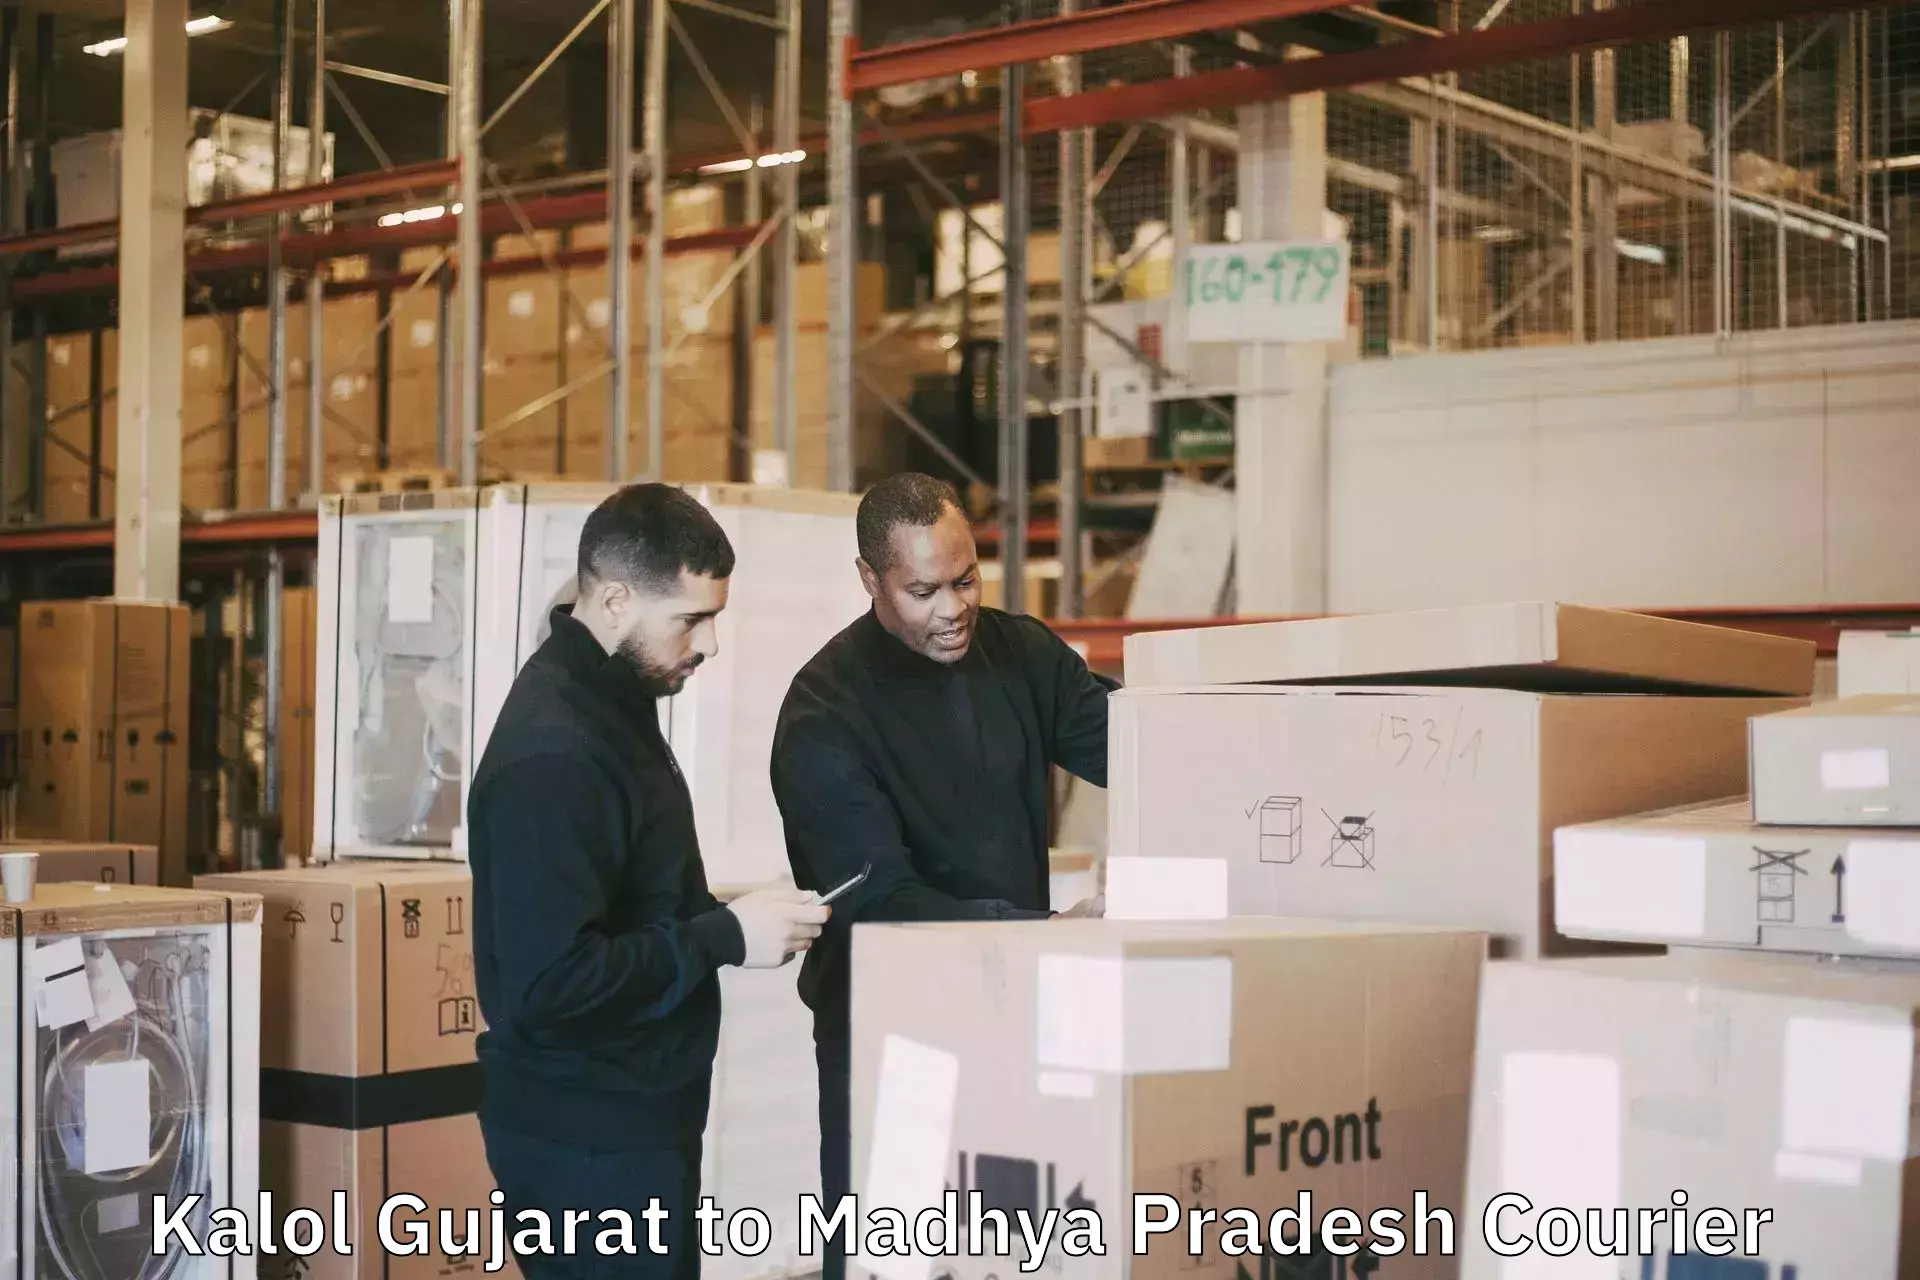 Luggage delivery providers Kalol Gujarat to Madhya Pradesh